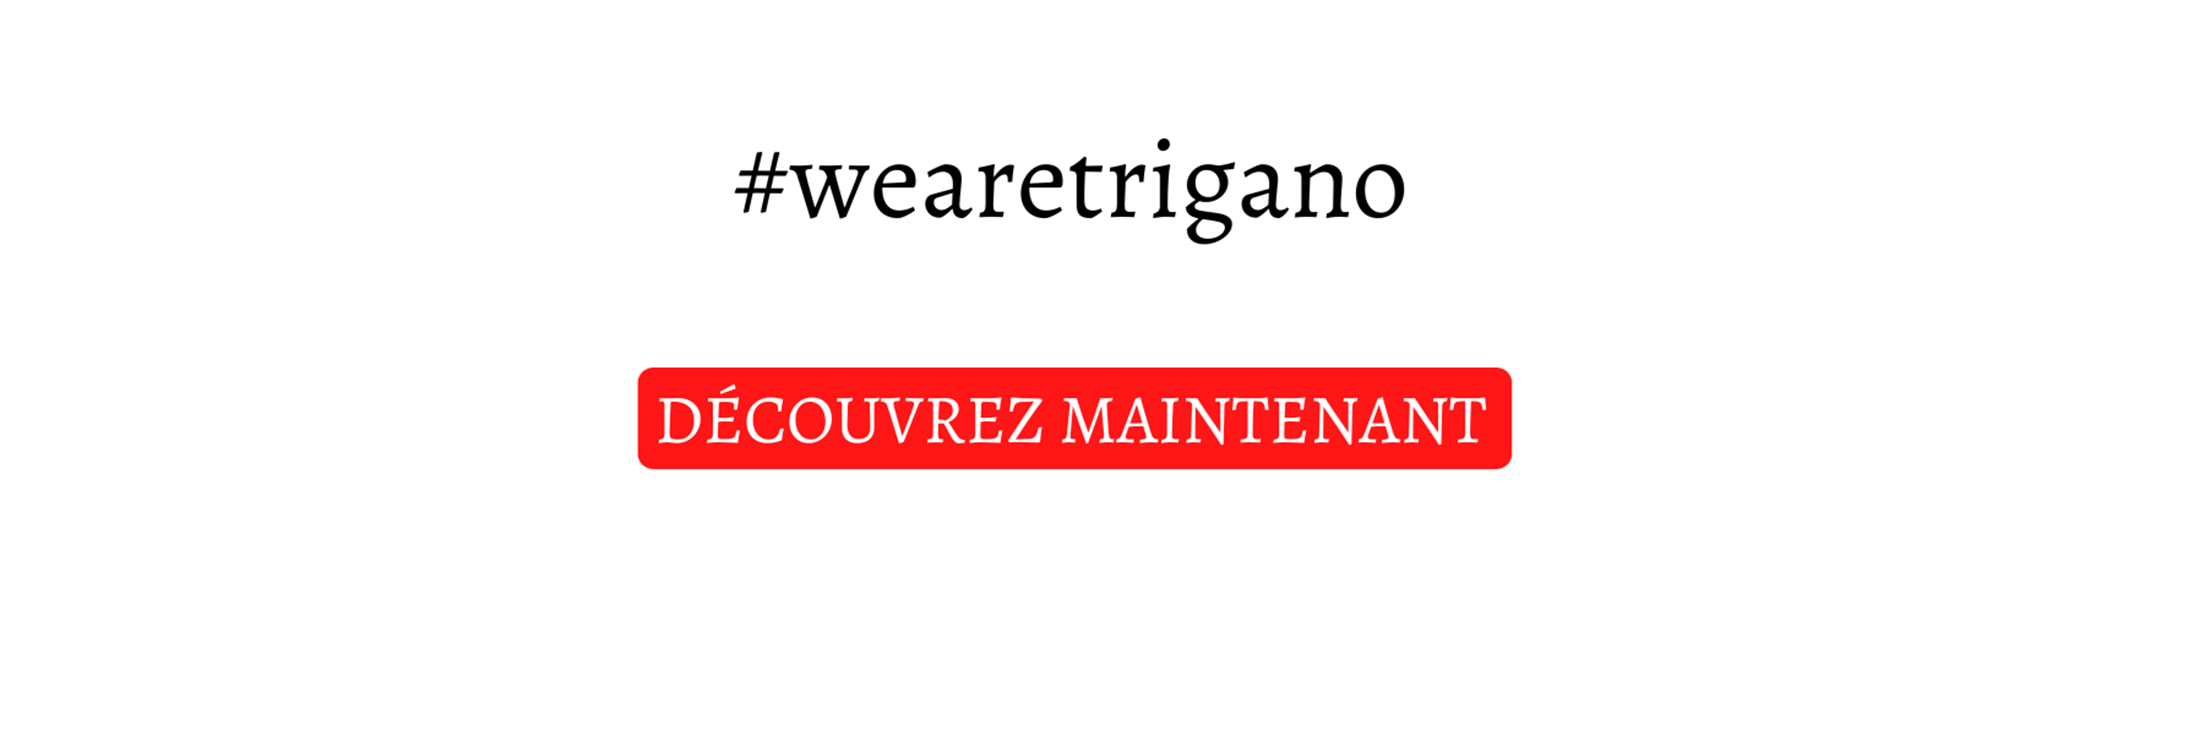 wearetrigano banner (FR).png